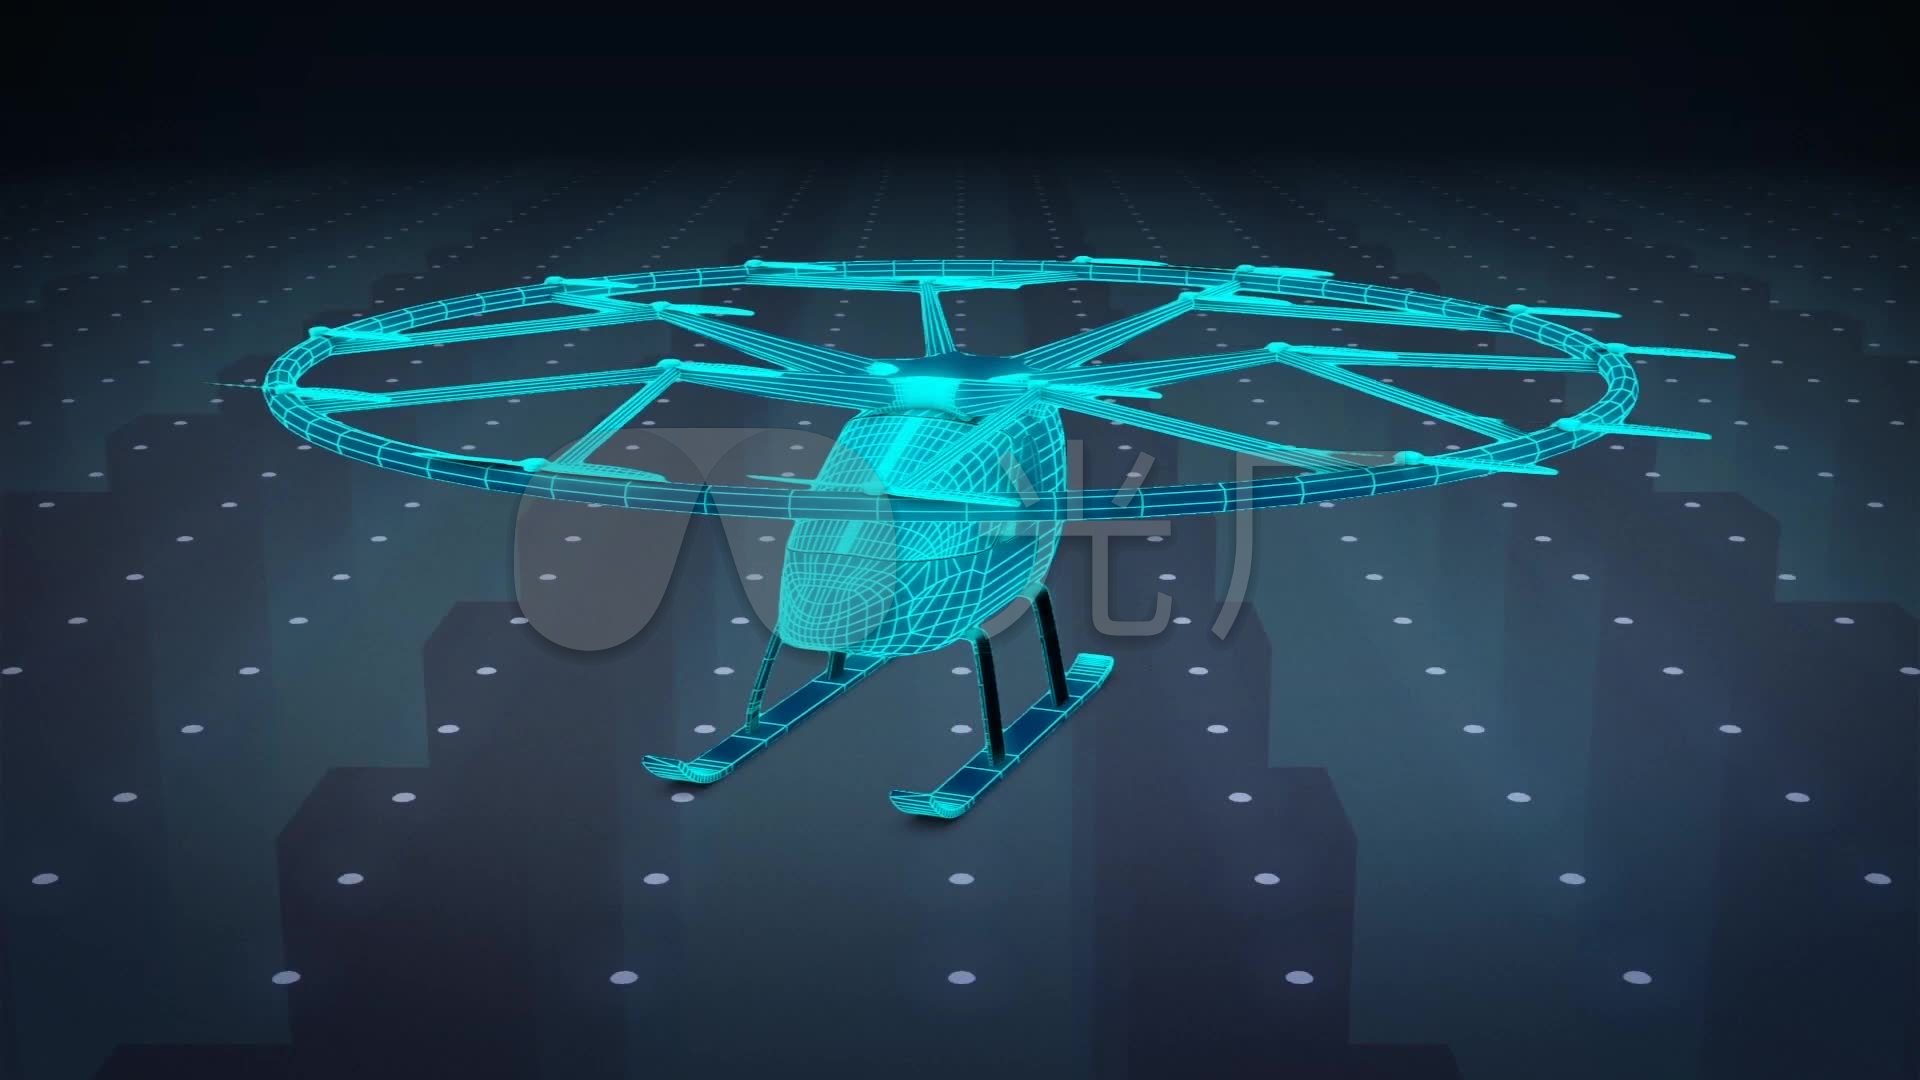 【3D概念设计】 XS816 Drone 具有超广角视野的无人机~ - 普象网